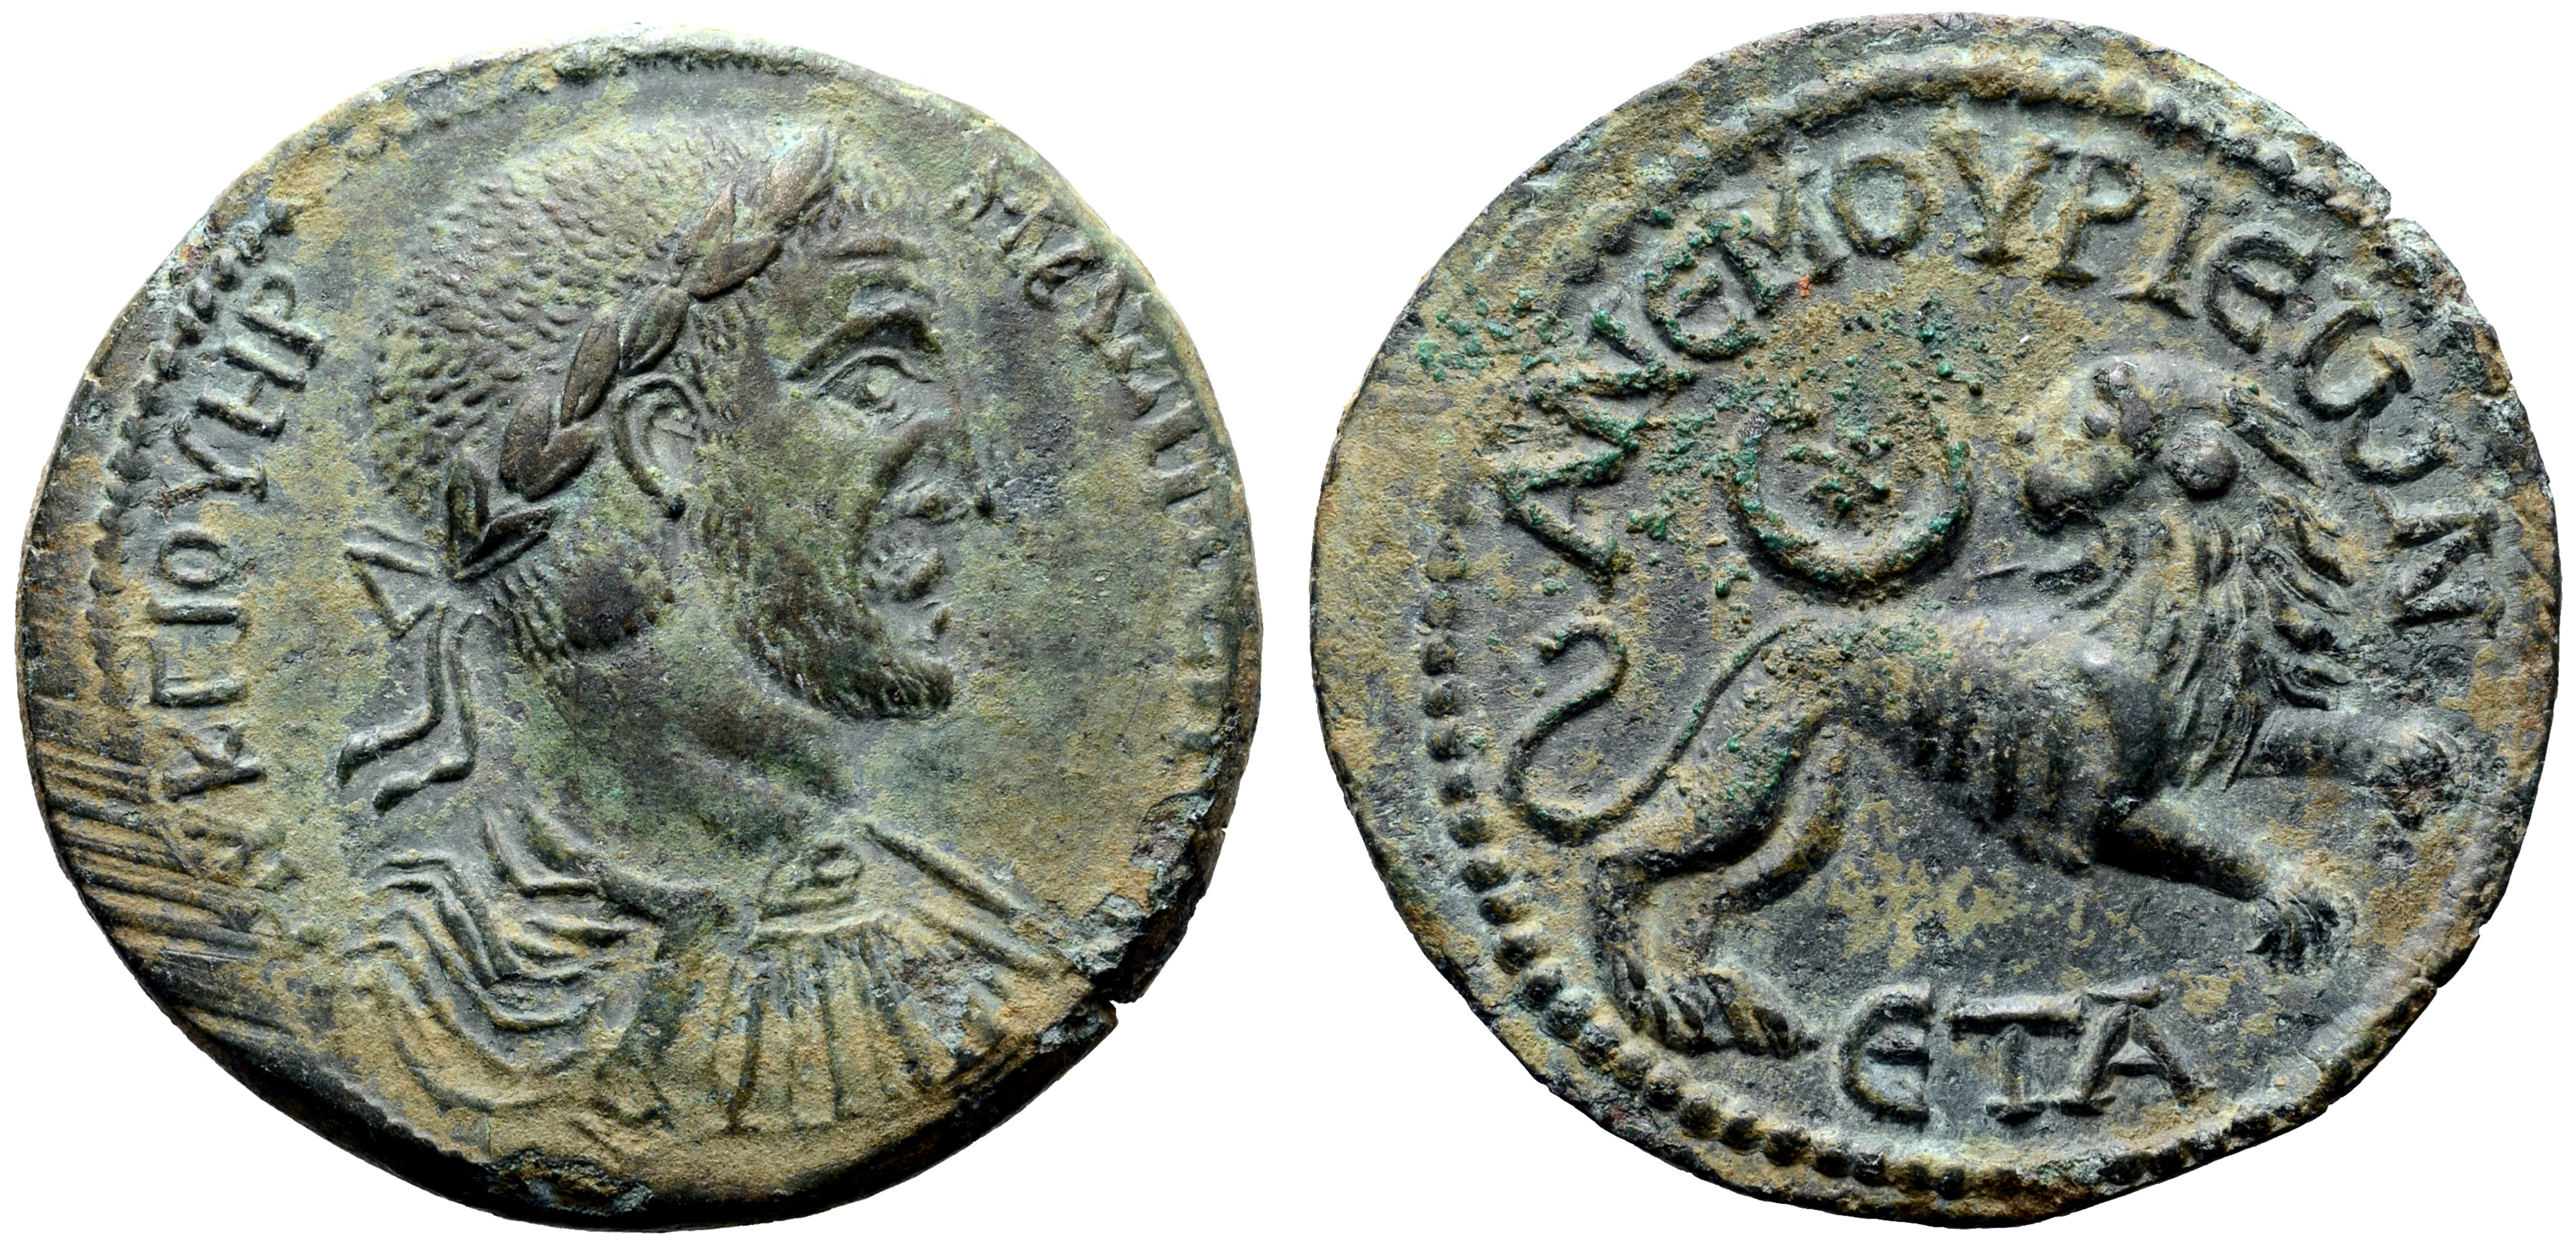 Maximinus I ?31 of Anemurium, Cilicia. Dated RY 1 = AD 235. AVT K ? IO OVHPON MA?IMEINON, laureate